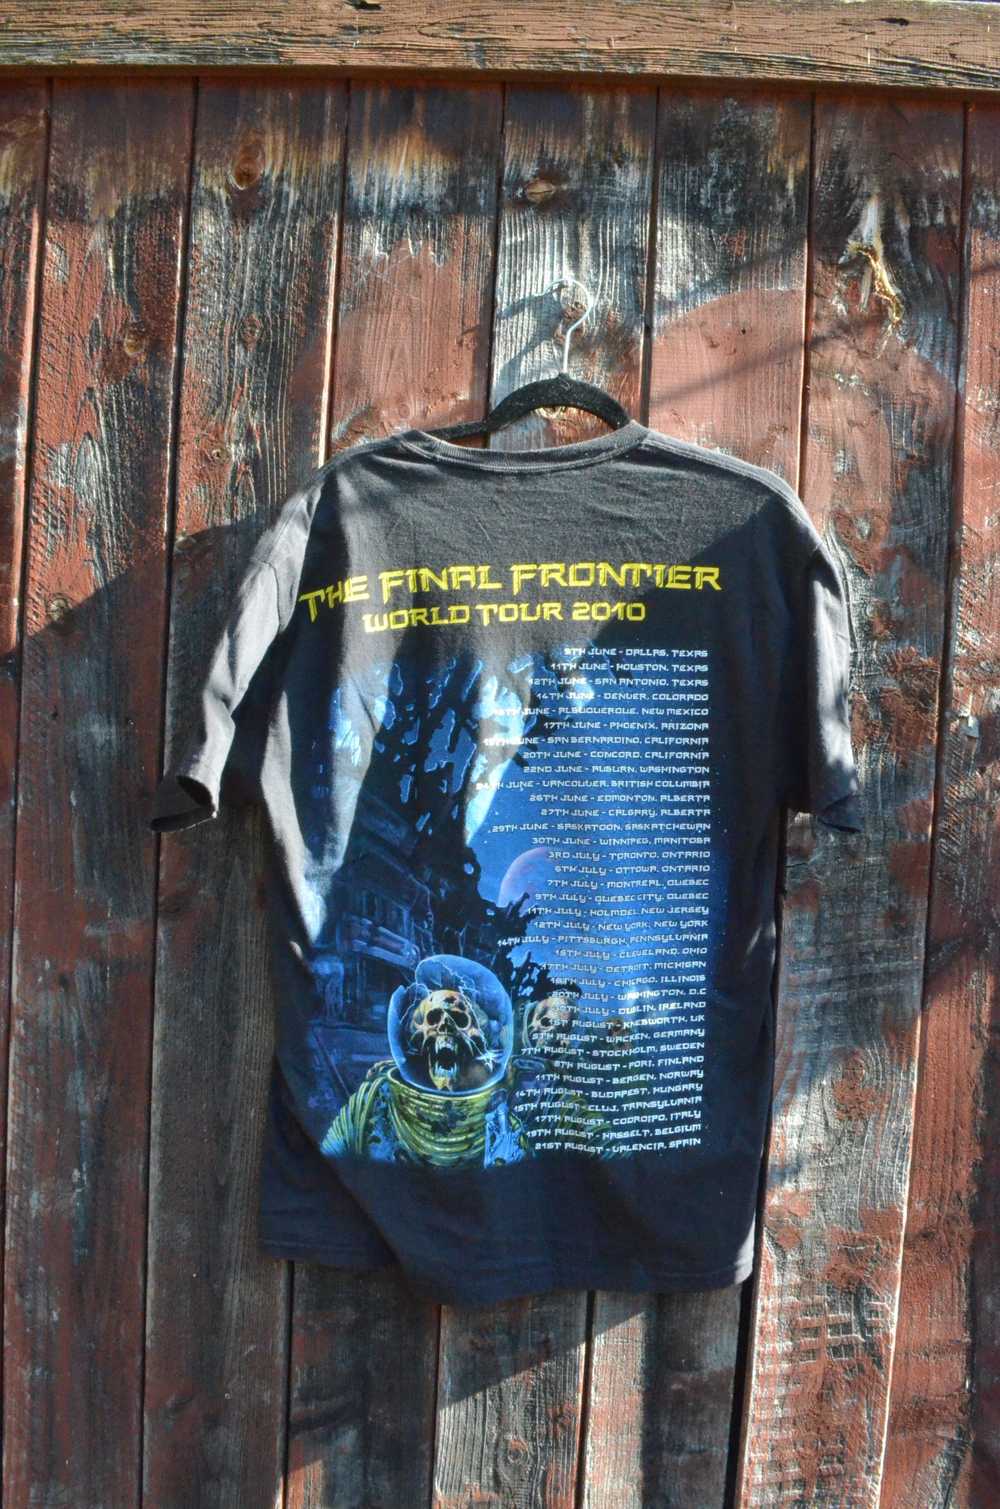 Iron Maiden 2010 Final Frontier tour t-shirt - image 2